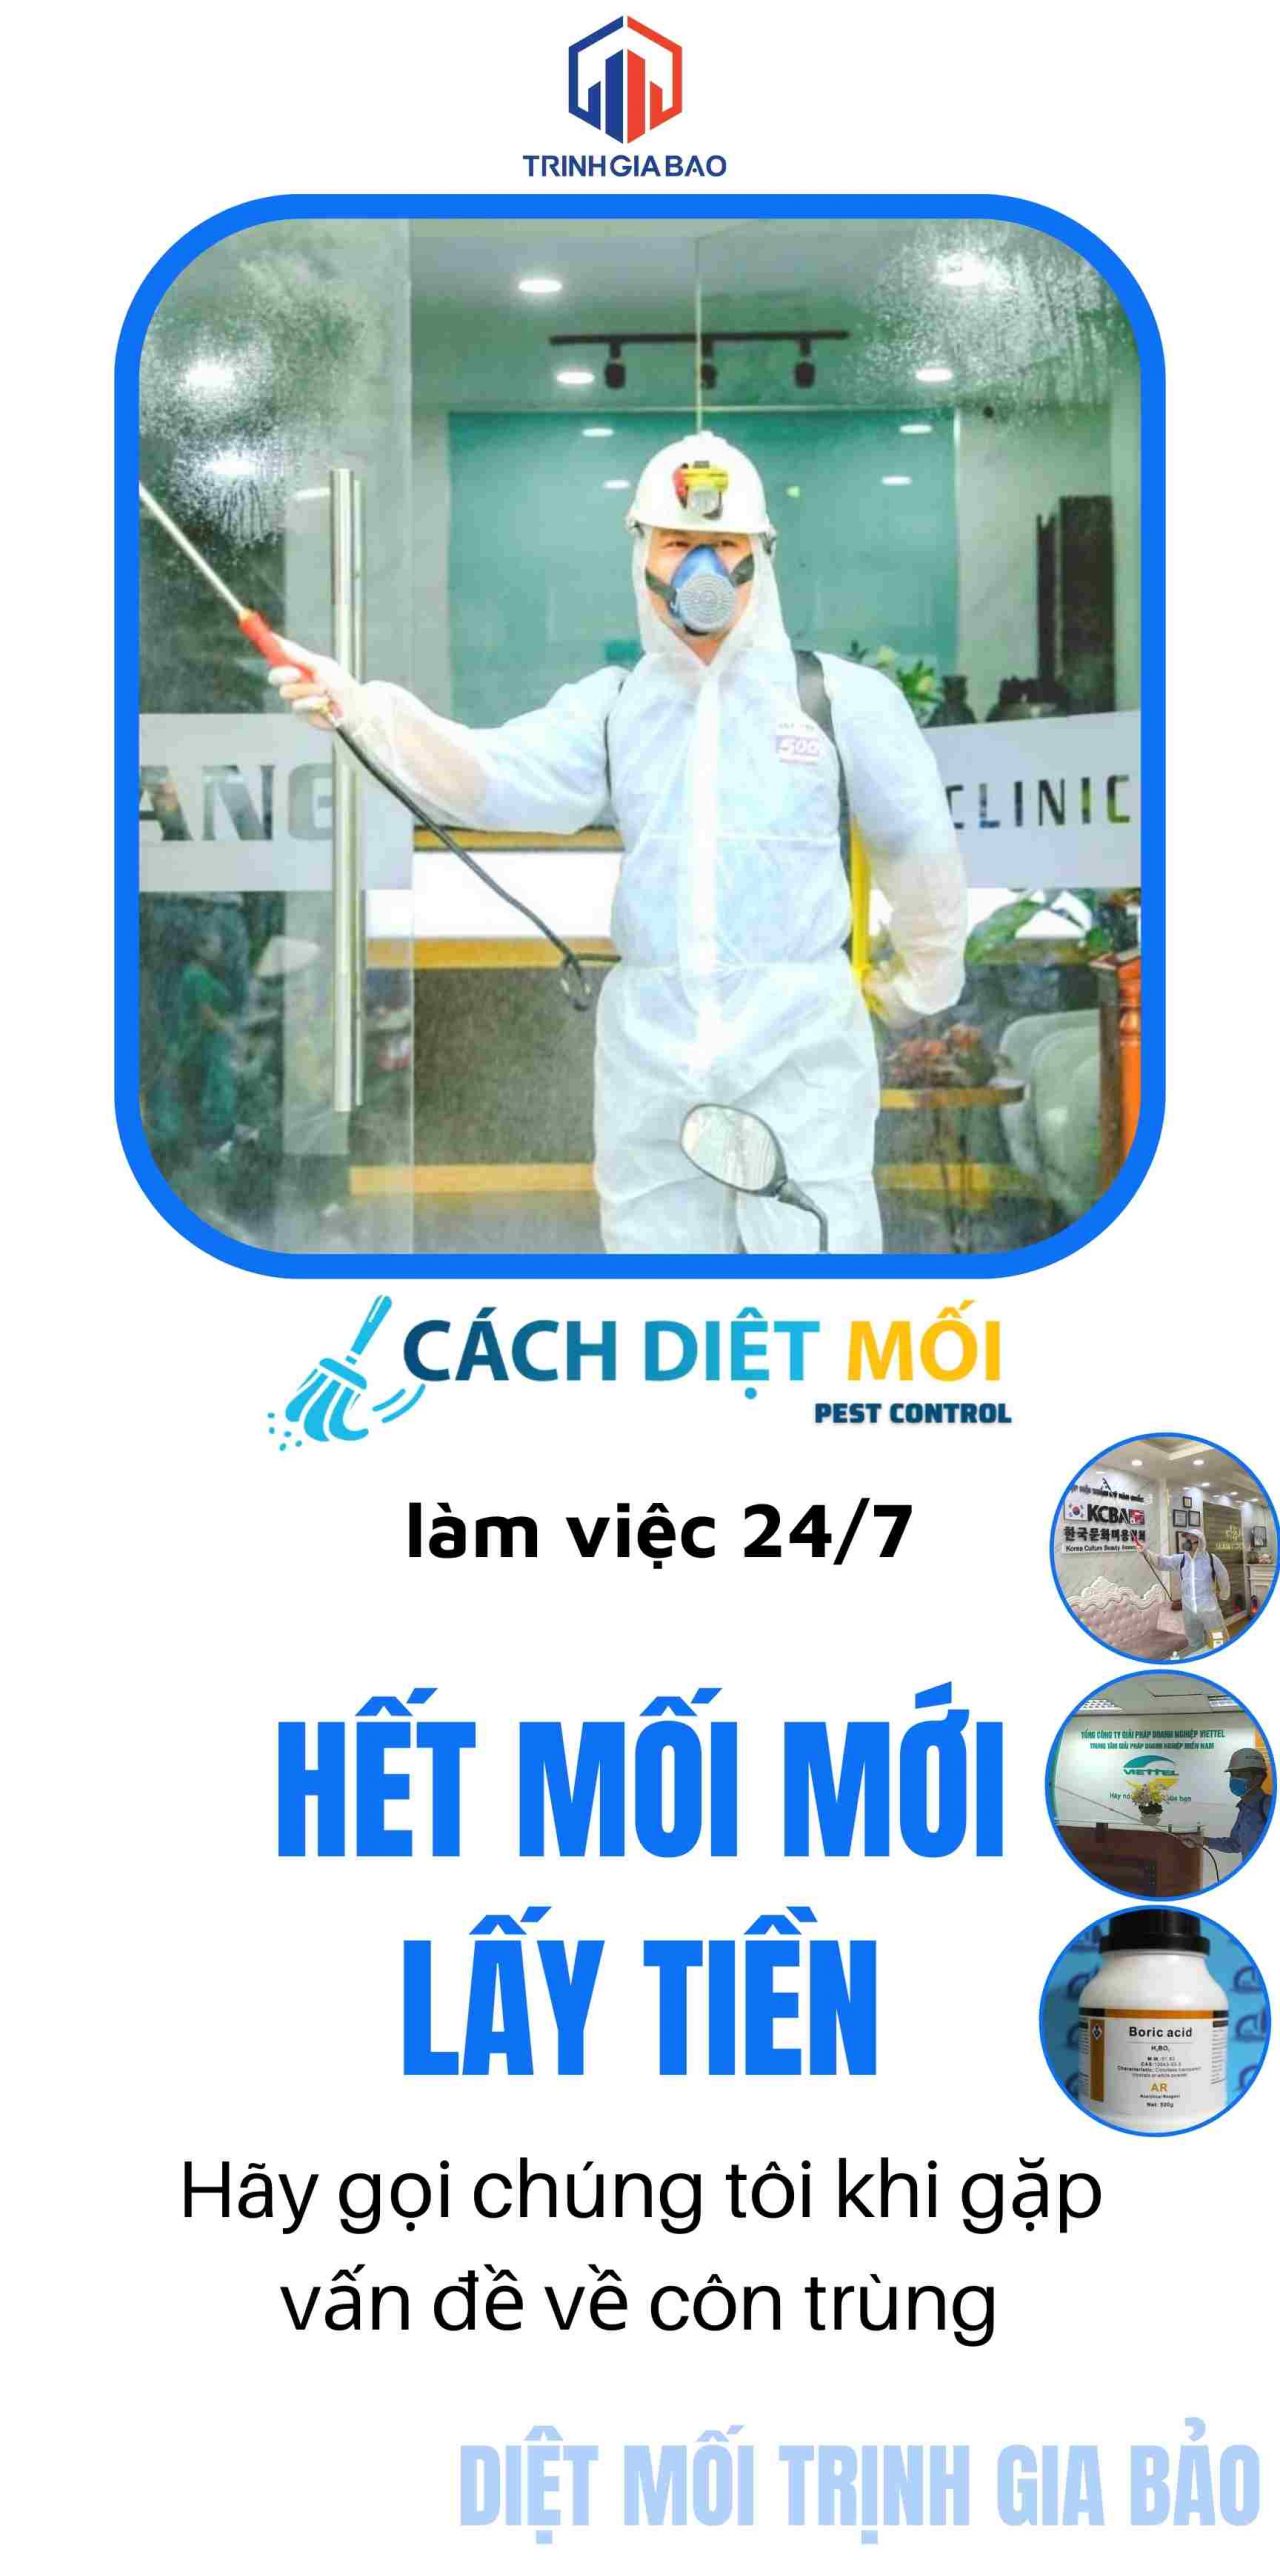 Dịch vụ diệt mối tại cachdietmoi.vn